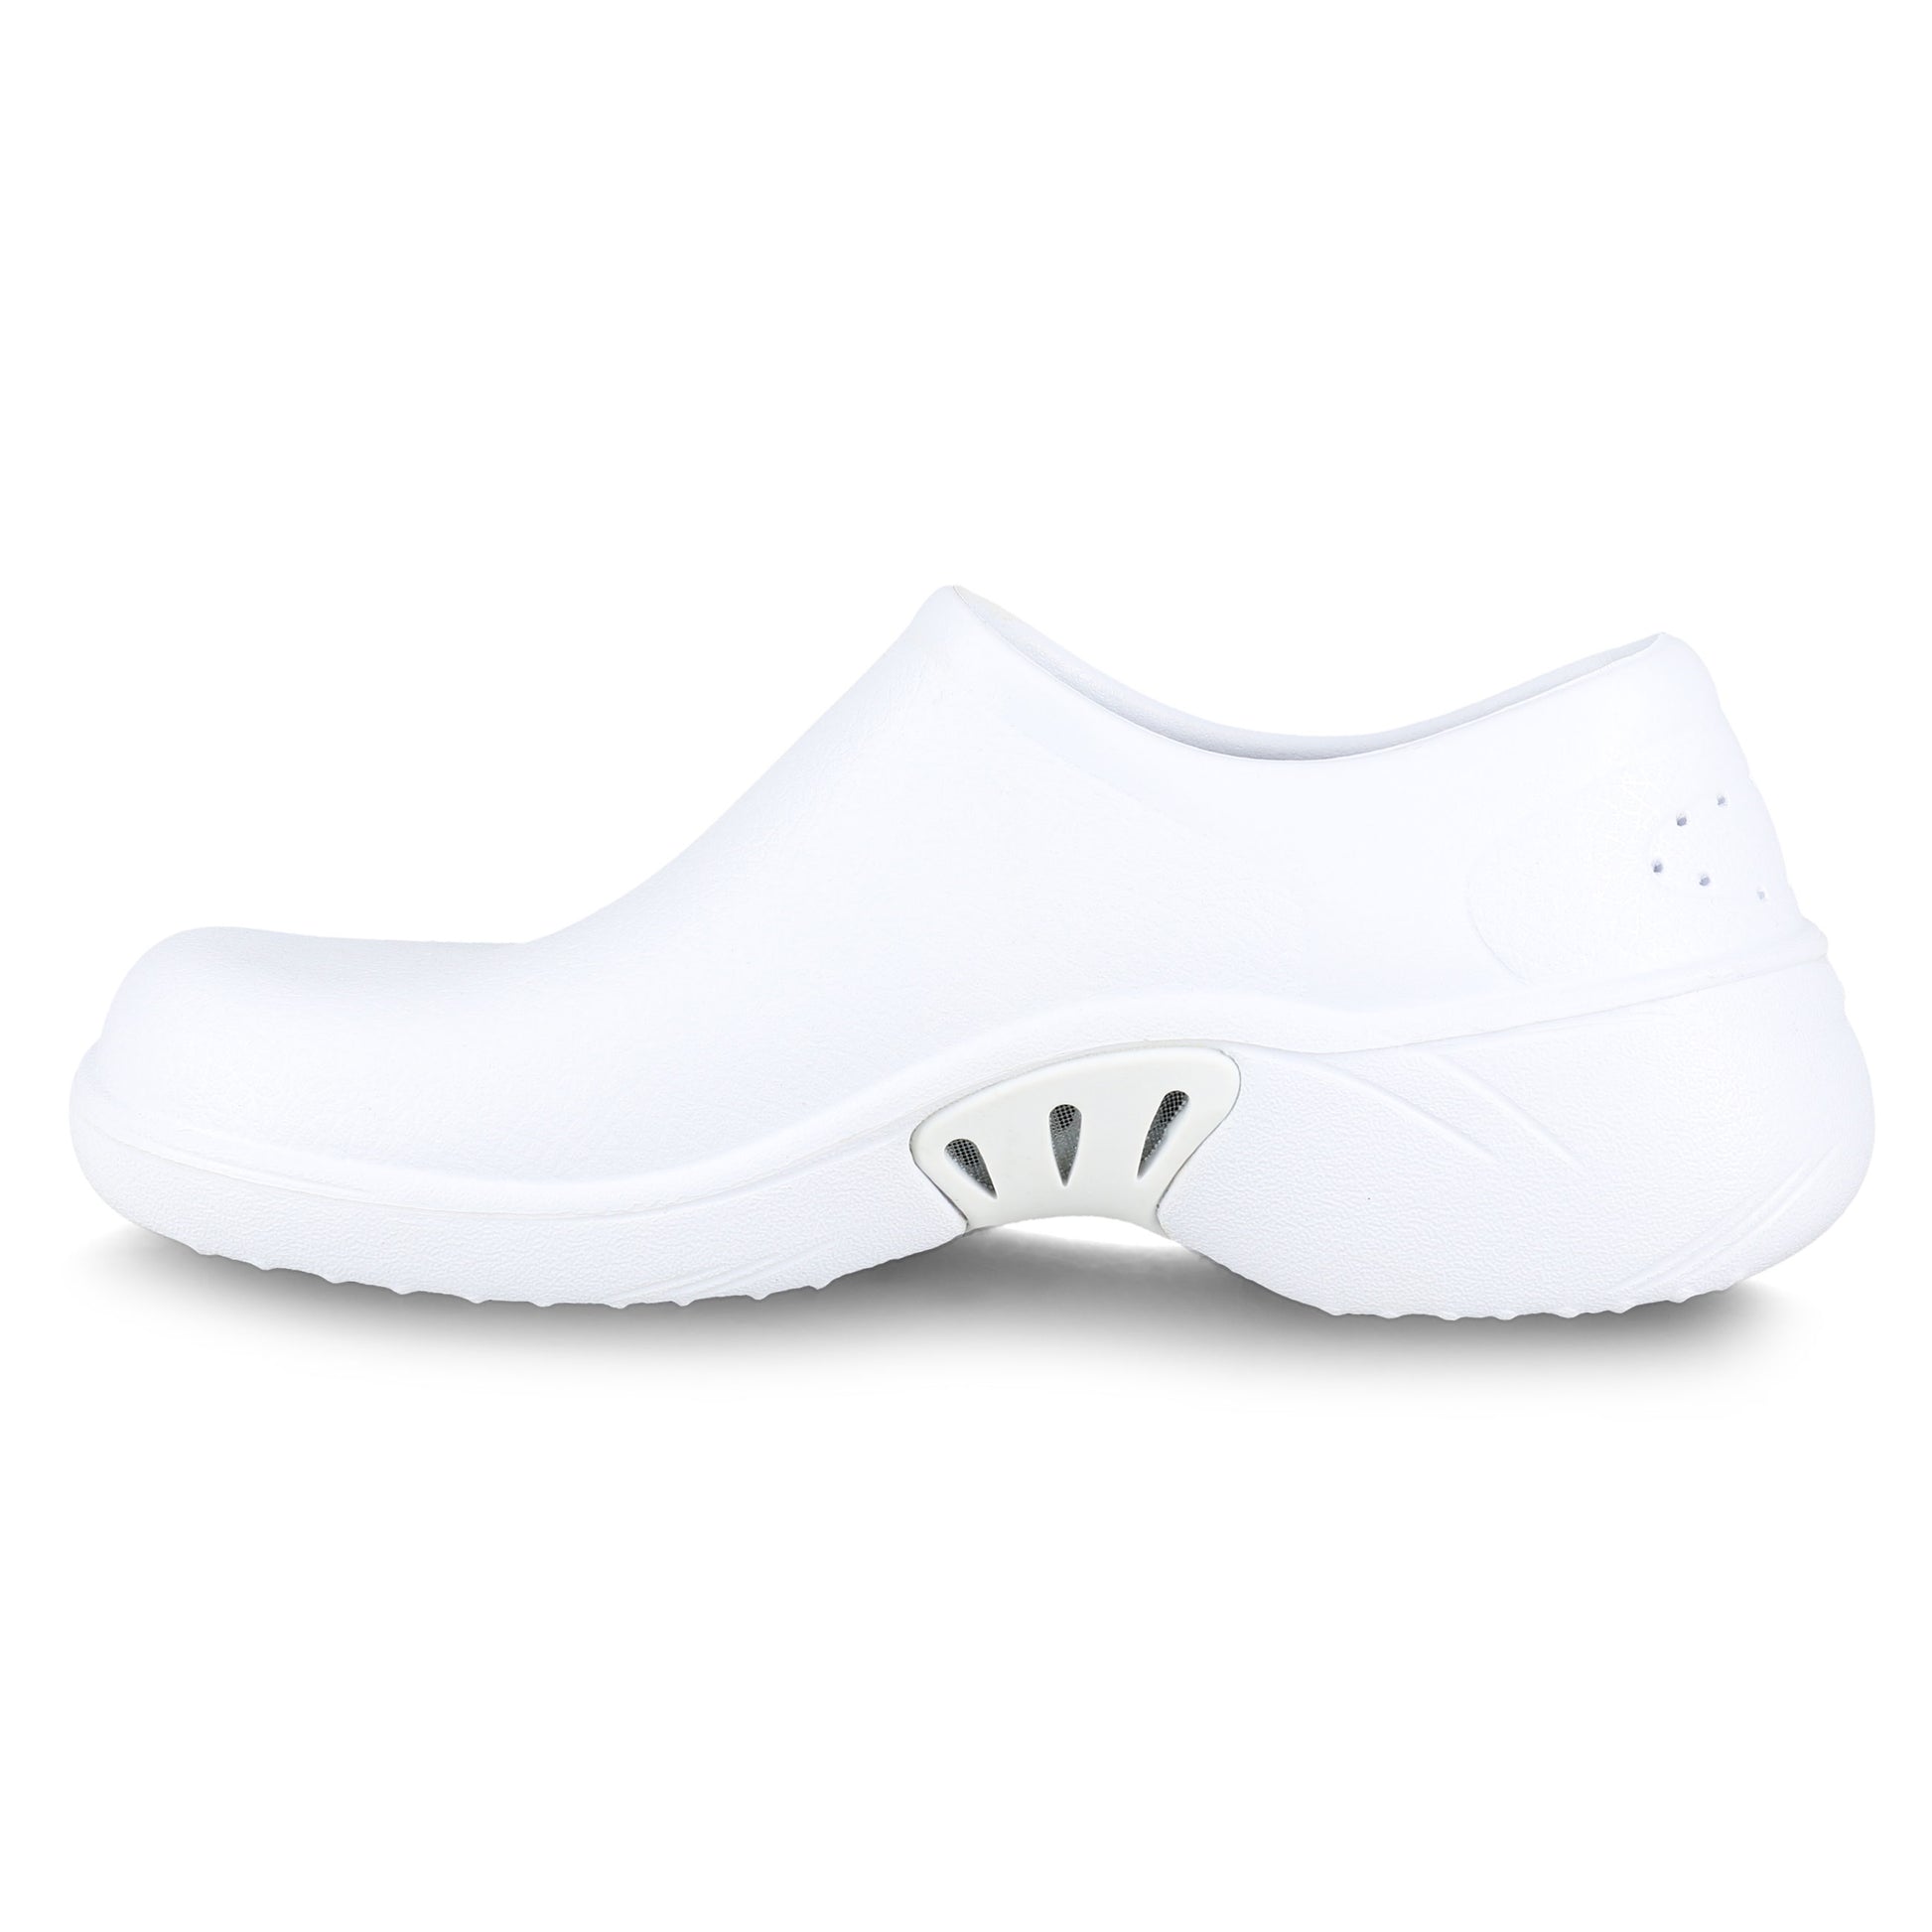 Nursemates Proair White Shoes